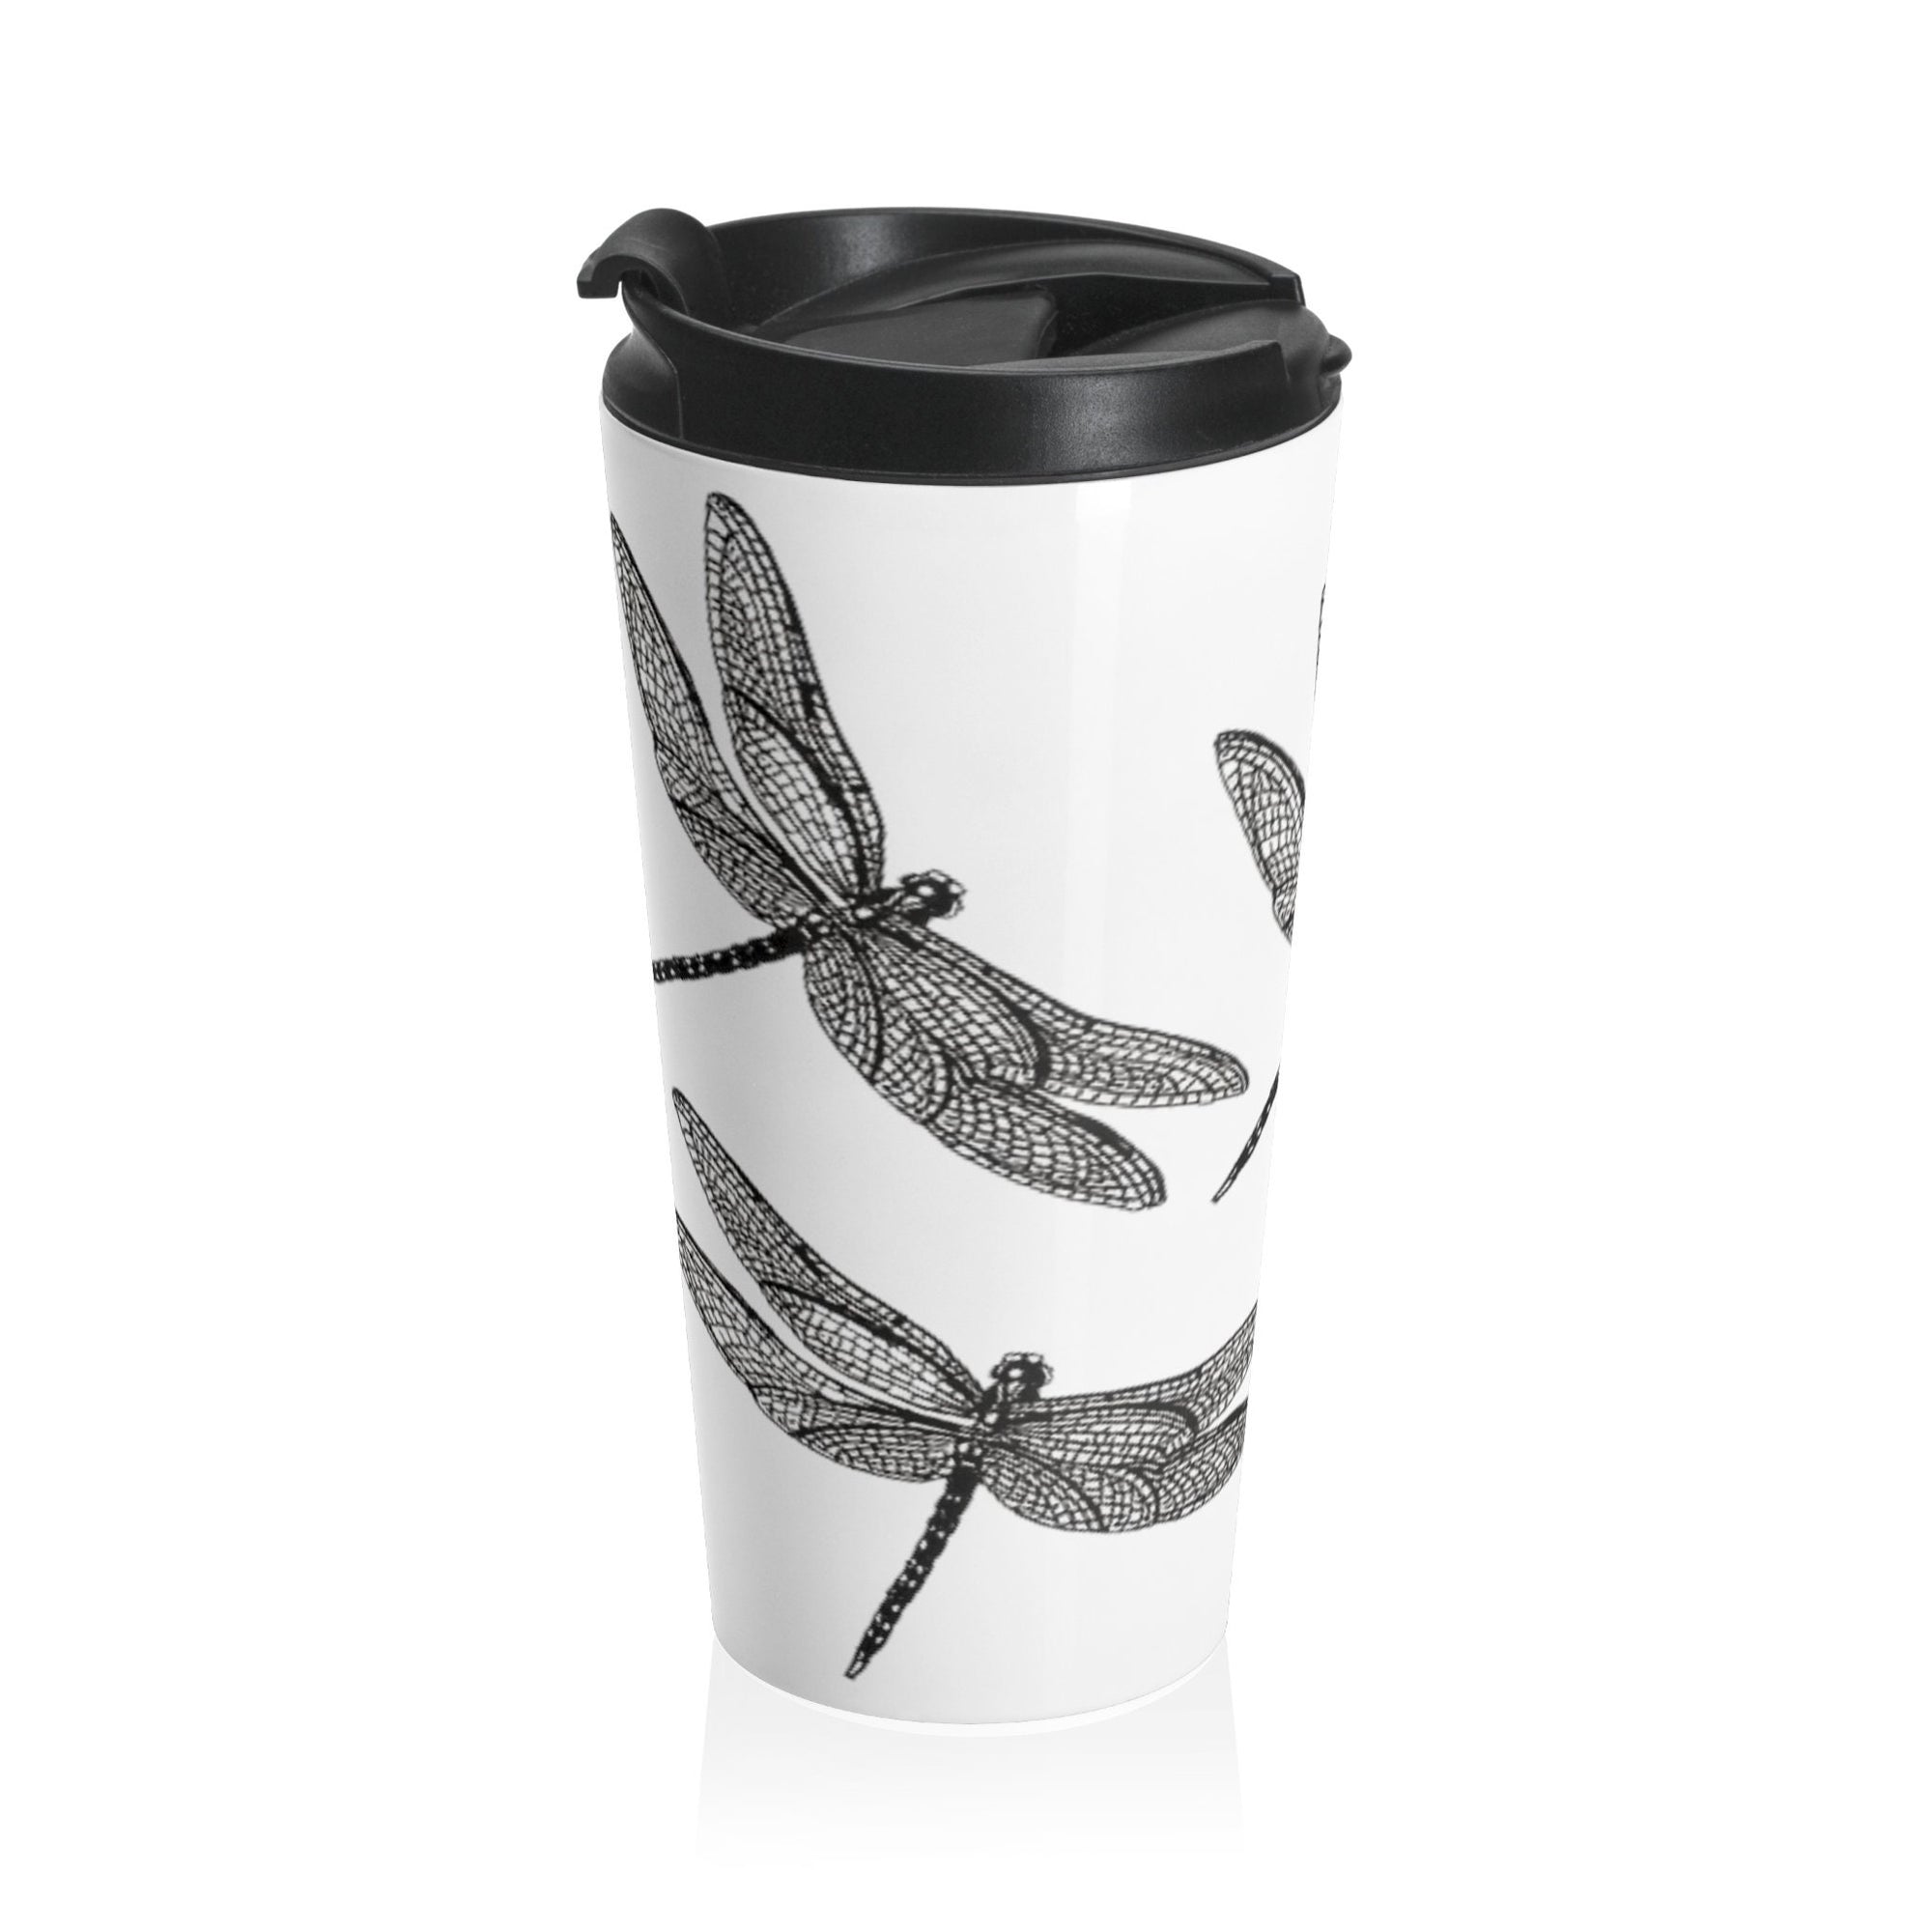 Dragonfly Travel Mug - Black & White Illustrated Travel Cup